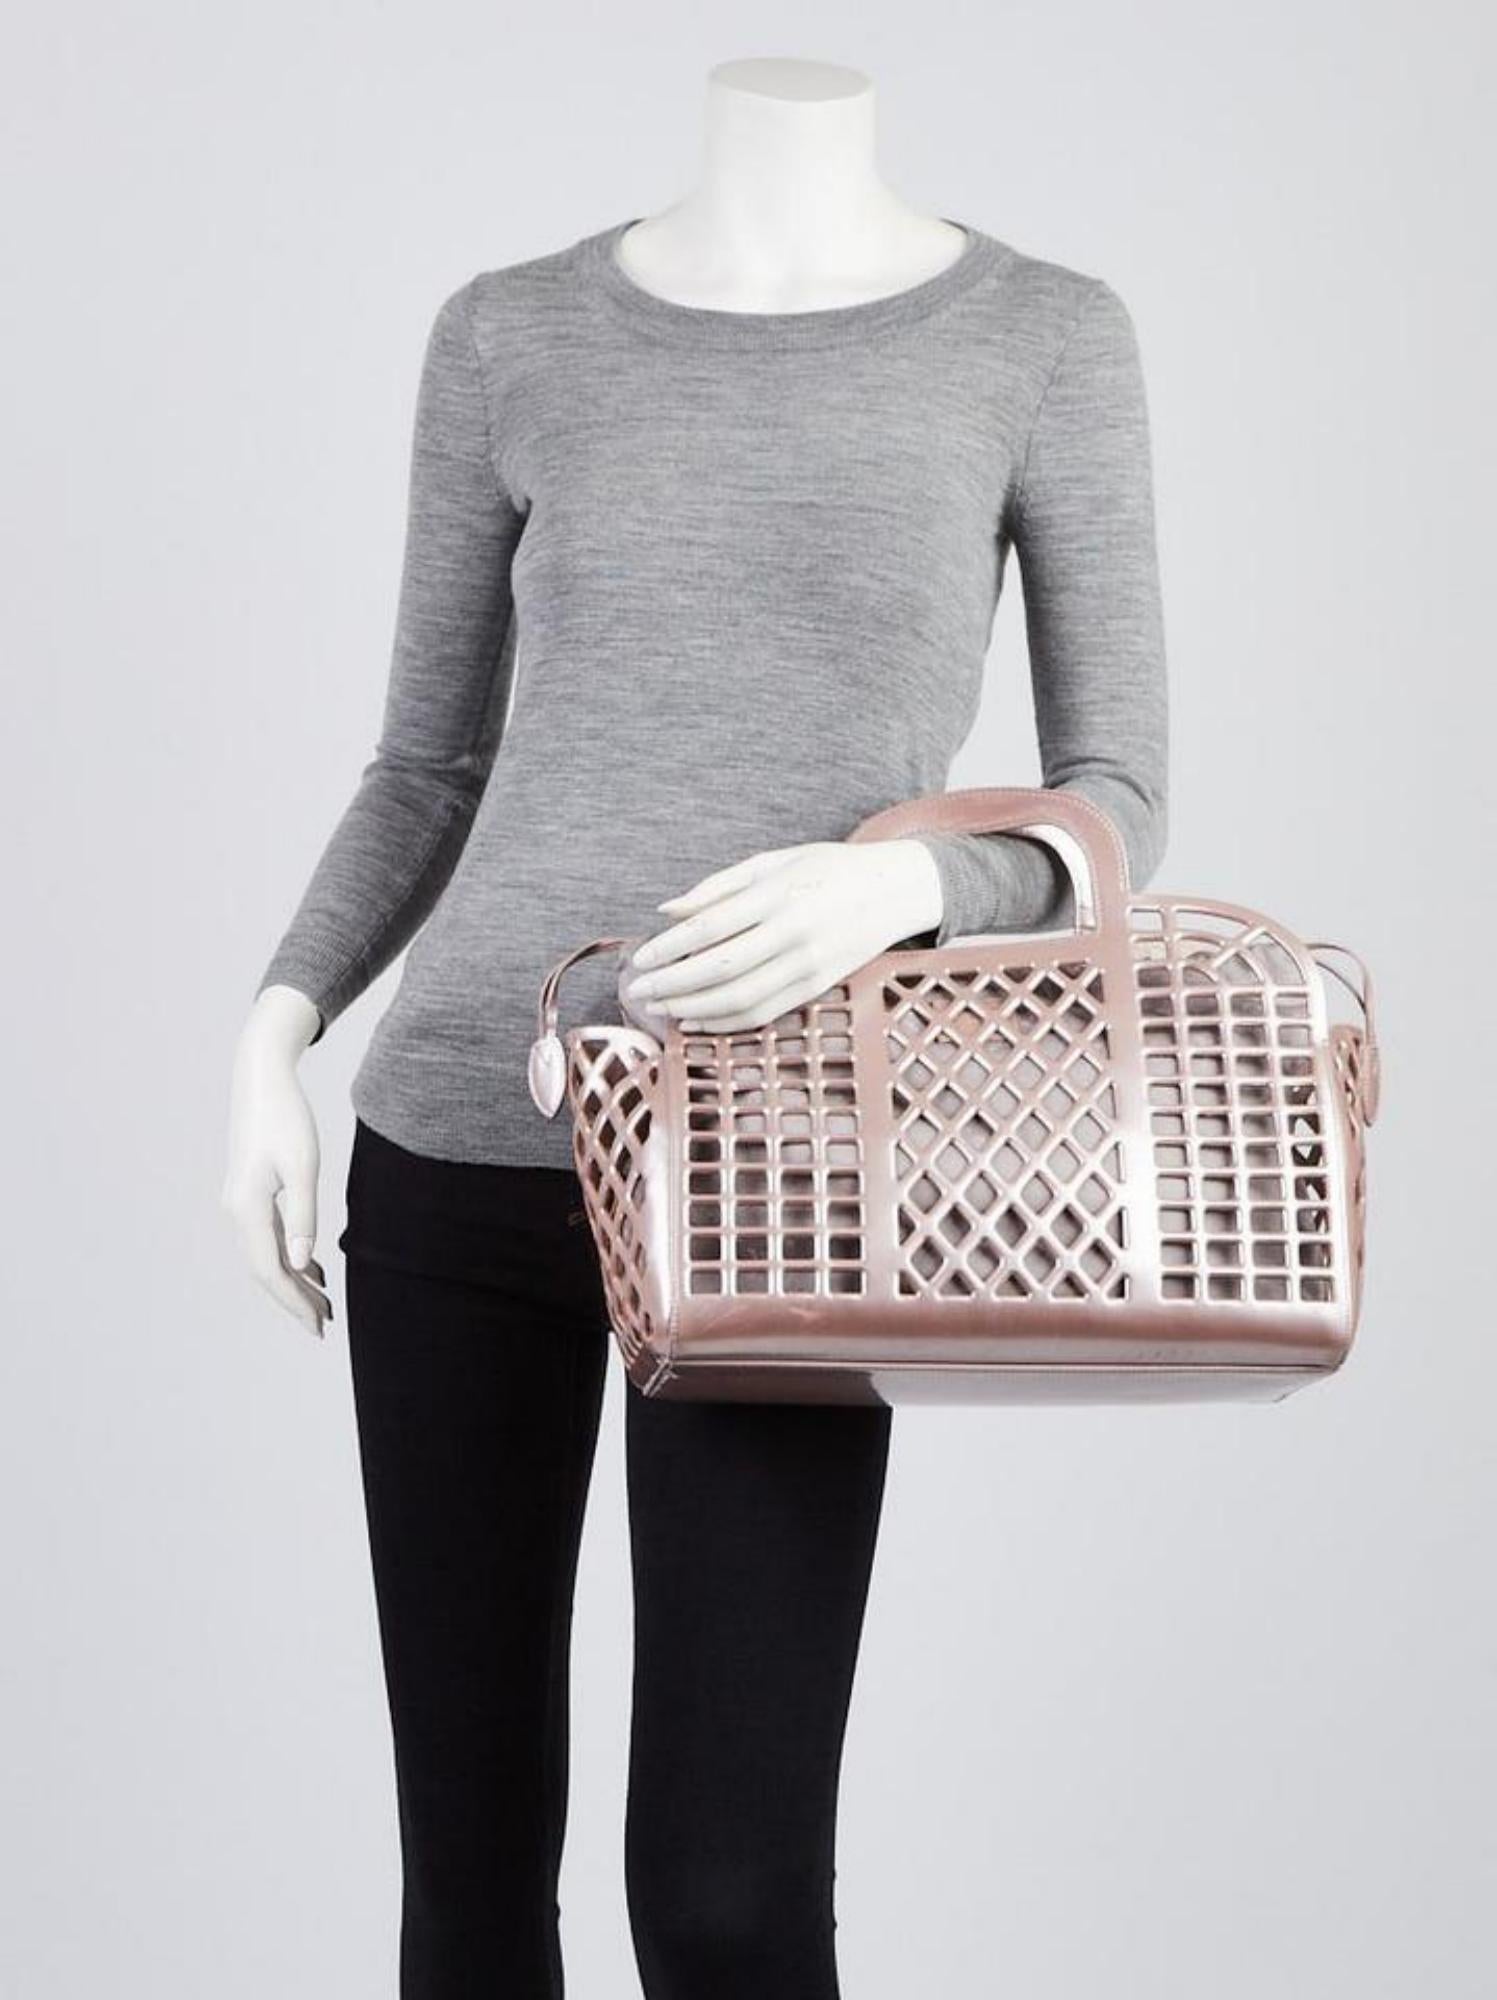 Louis Vuitton Jelly Shopping Bag